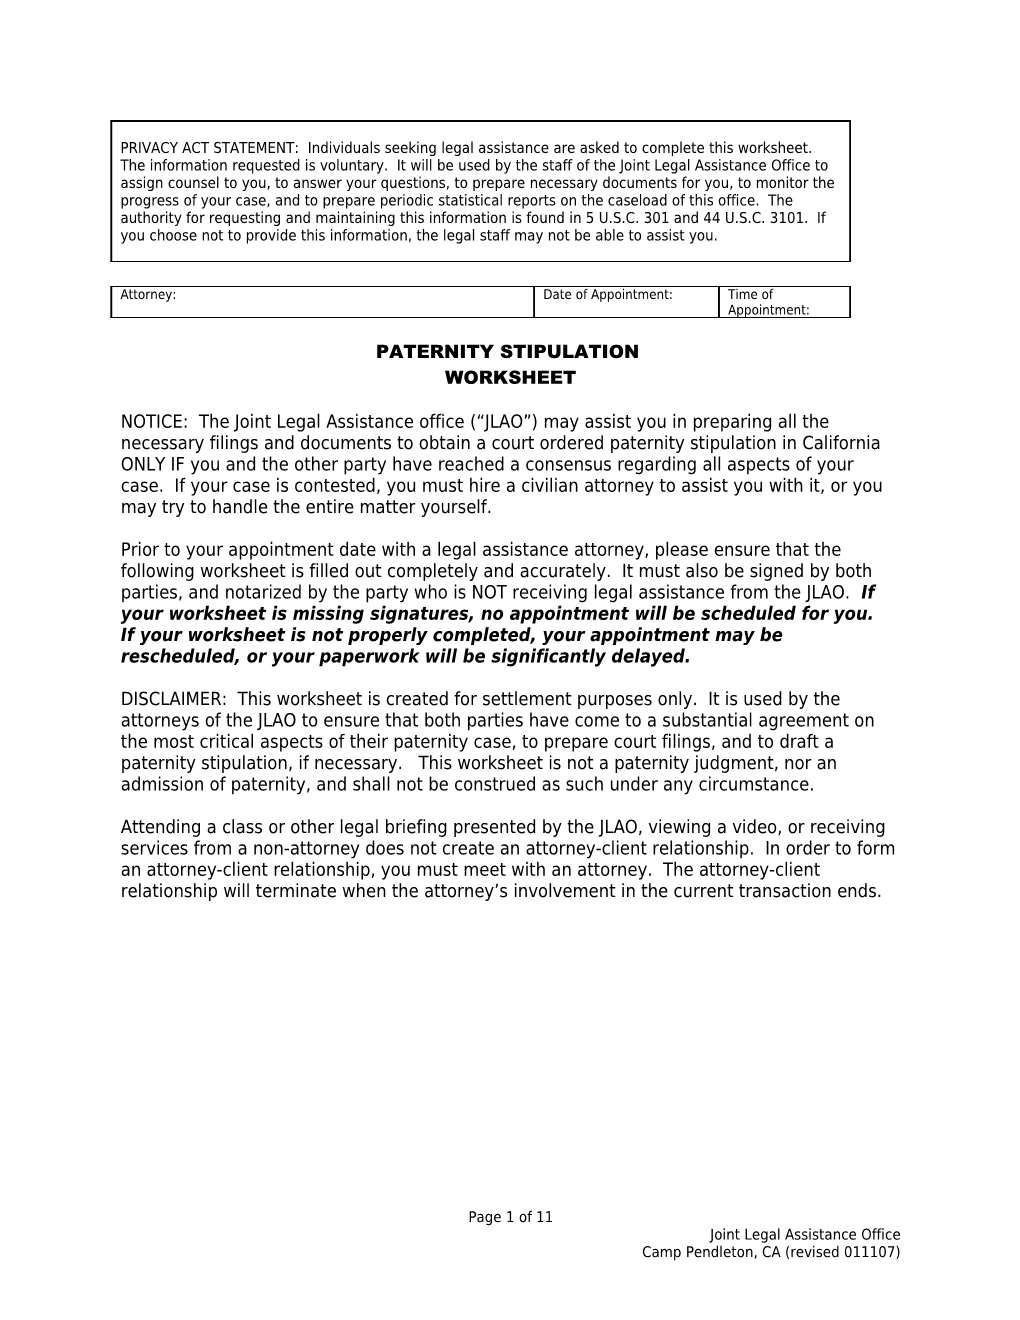 PATERNITY STIPULATION Worksheet